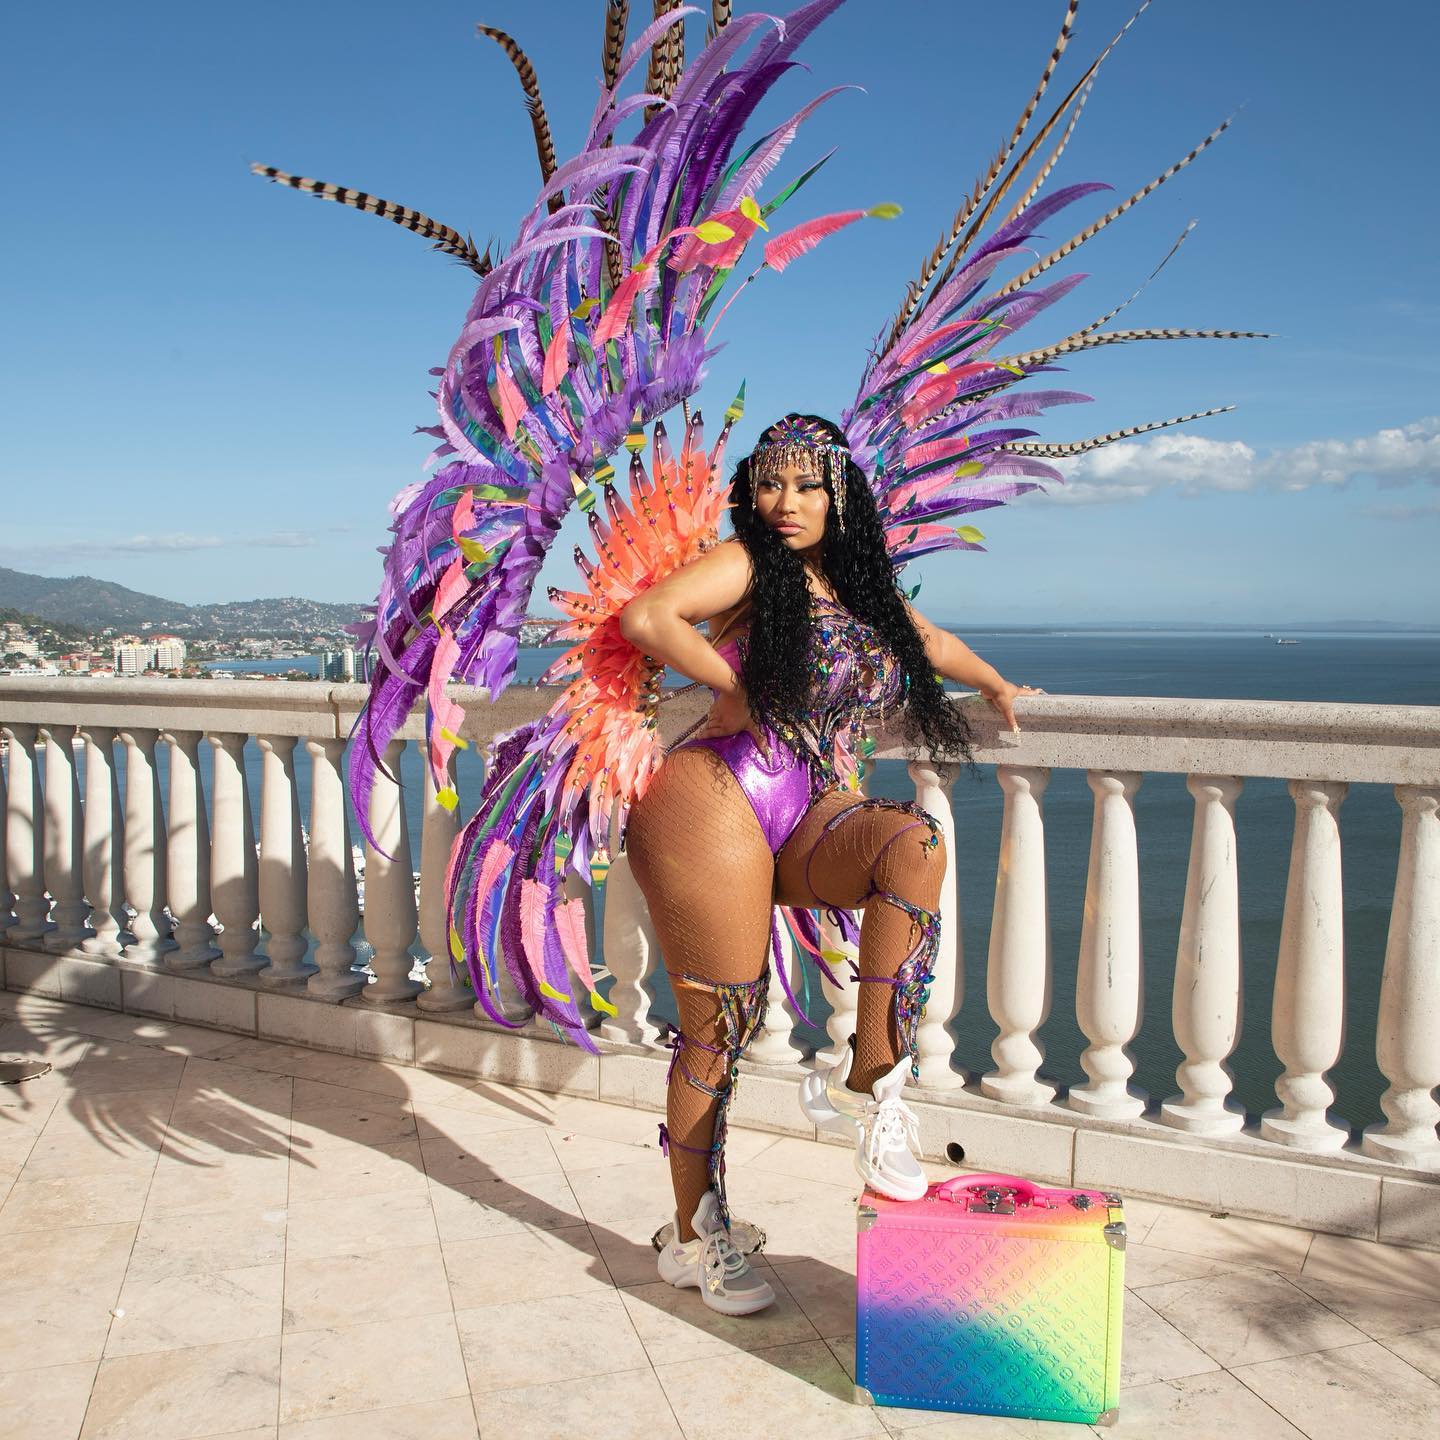 Fotos n°5 : Nicki Minaj hace carnaval!